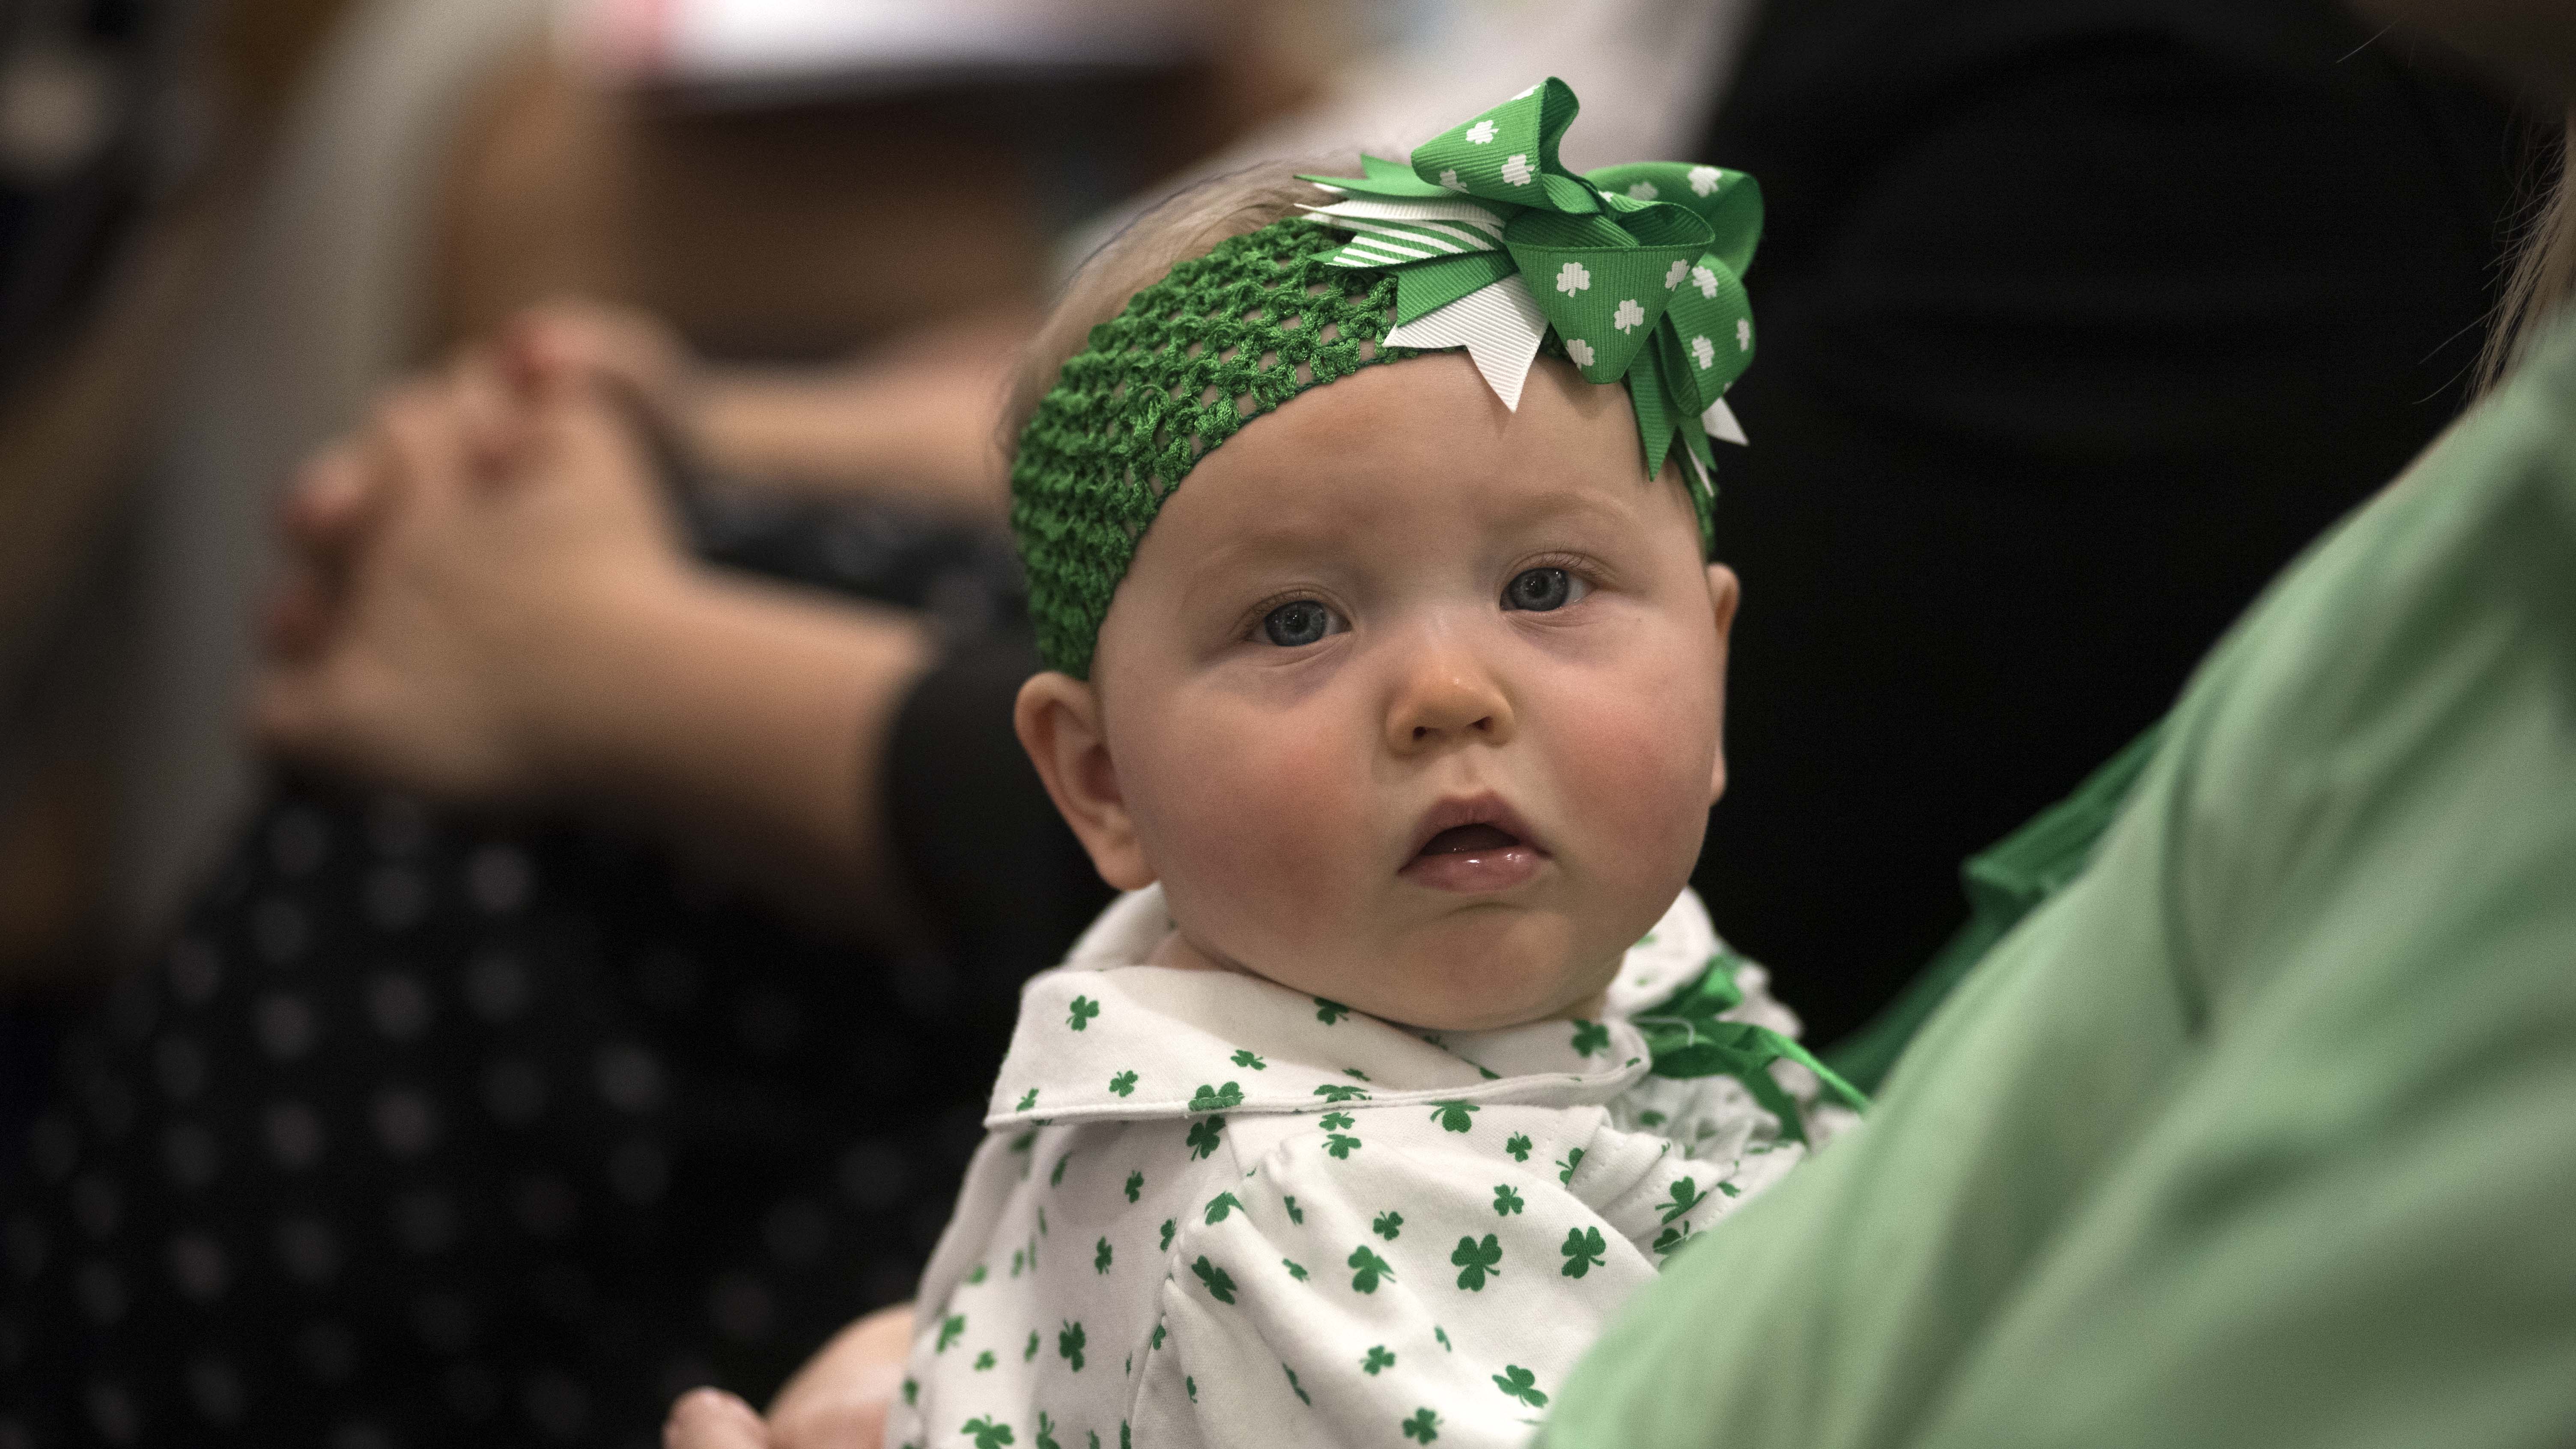 An Irish family dressed their baby in shamrock clothing.